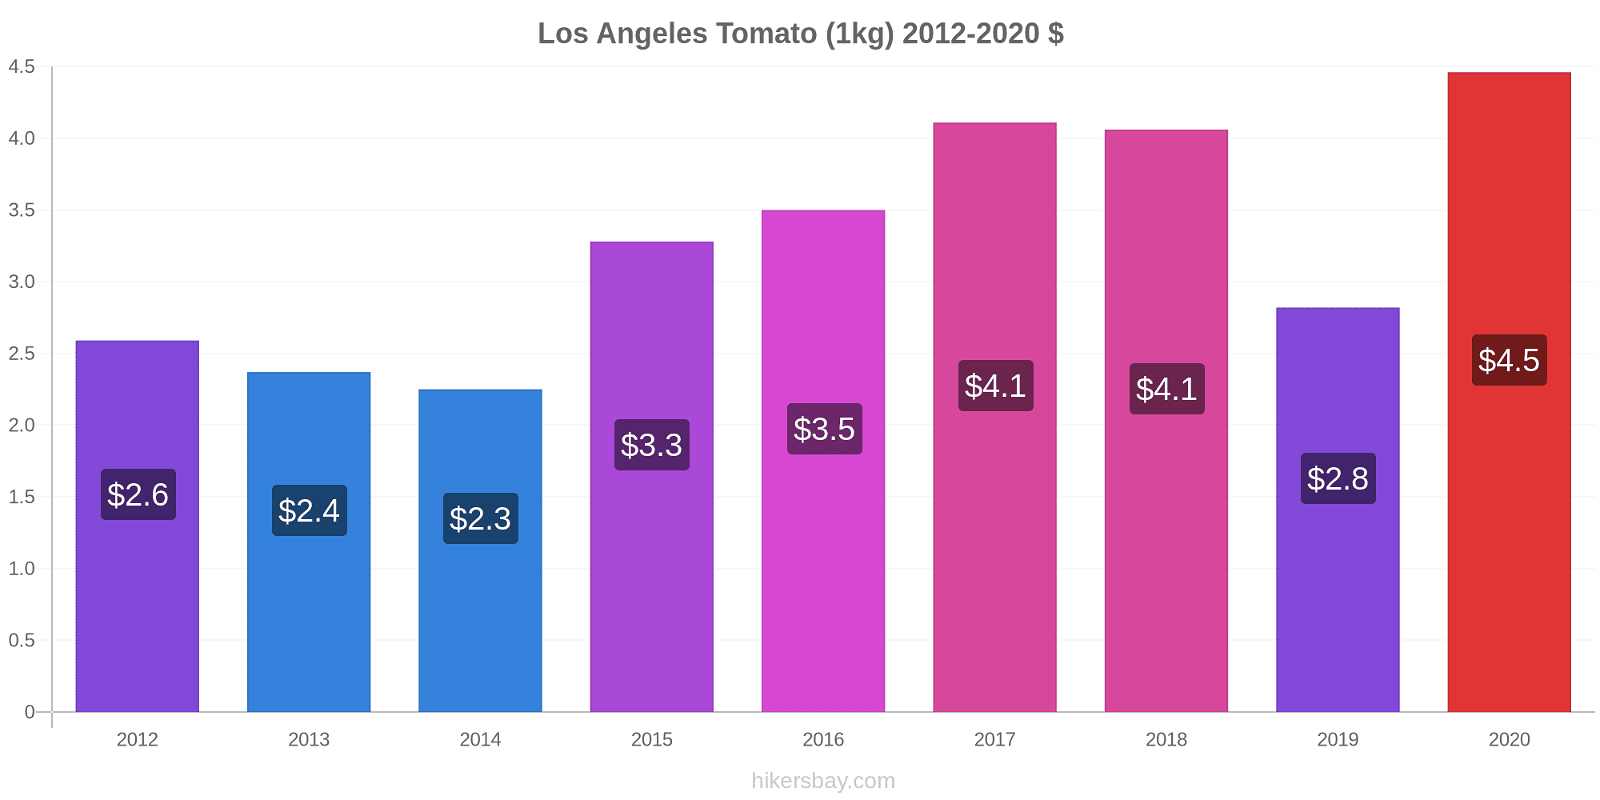 Los Angeles price changes Tomato (1kg) hikersbay.com